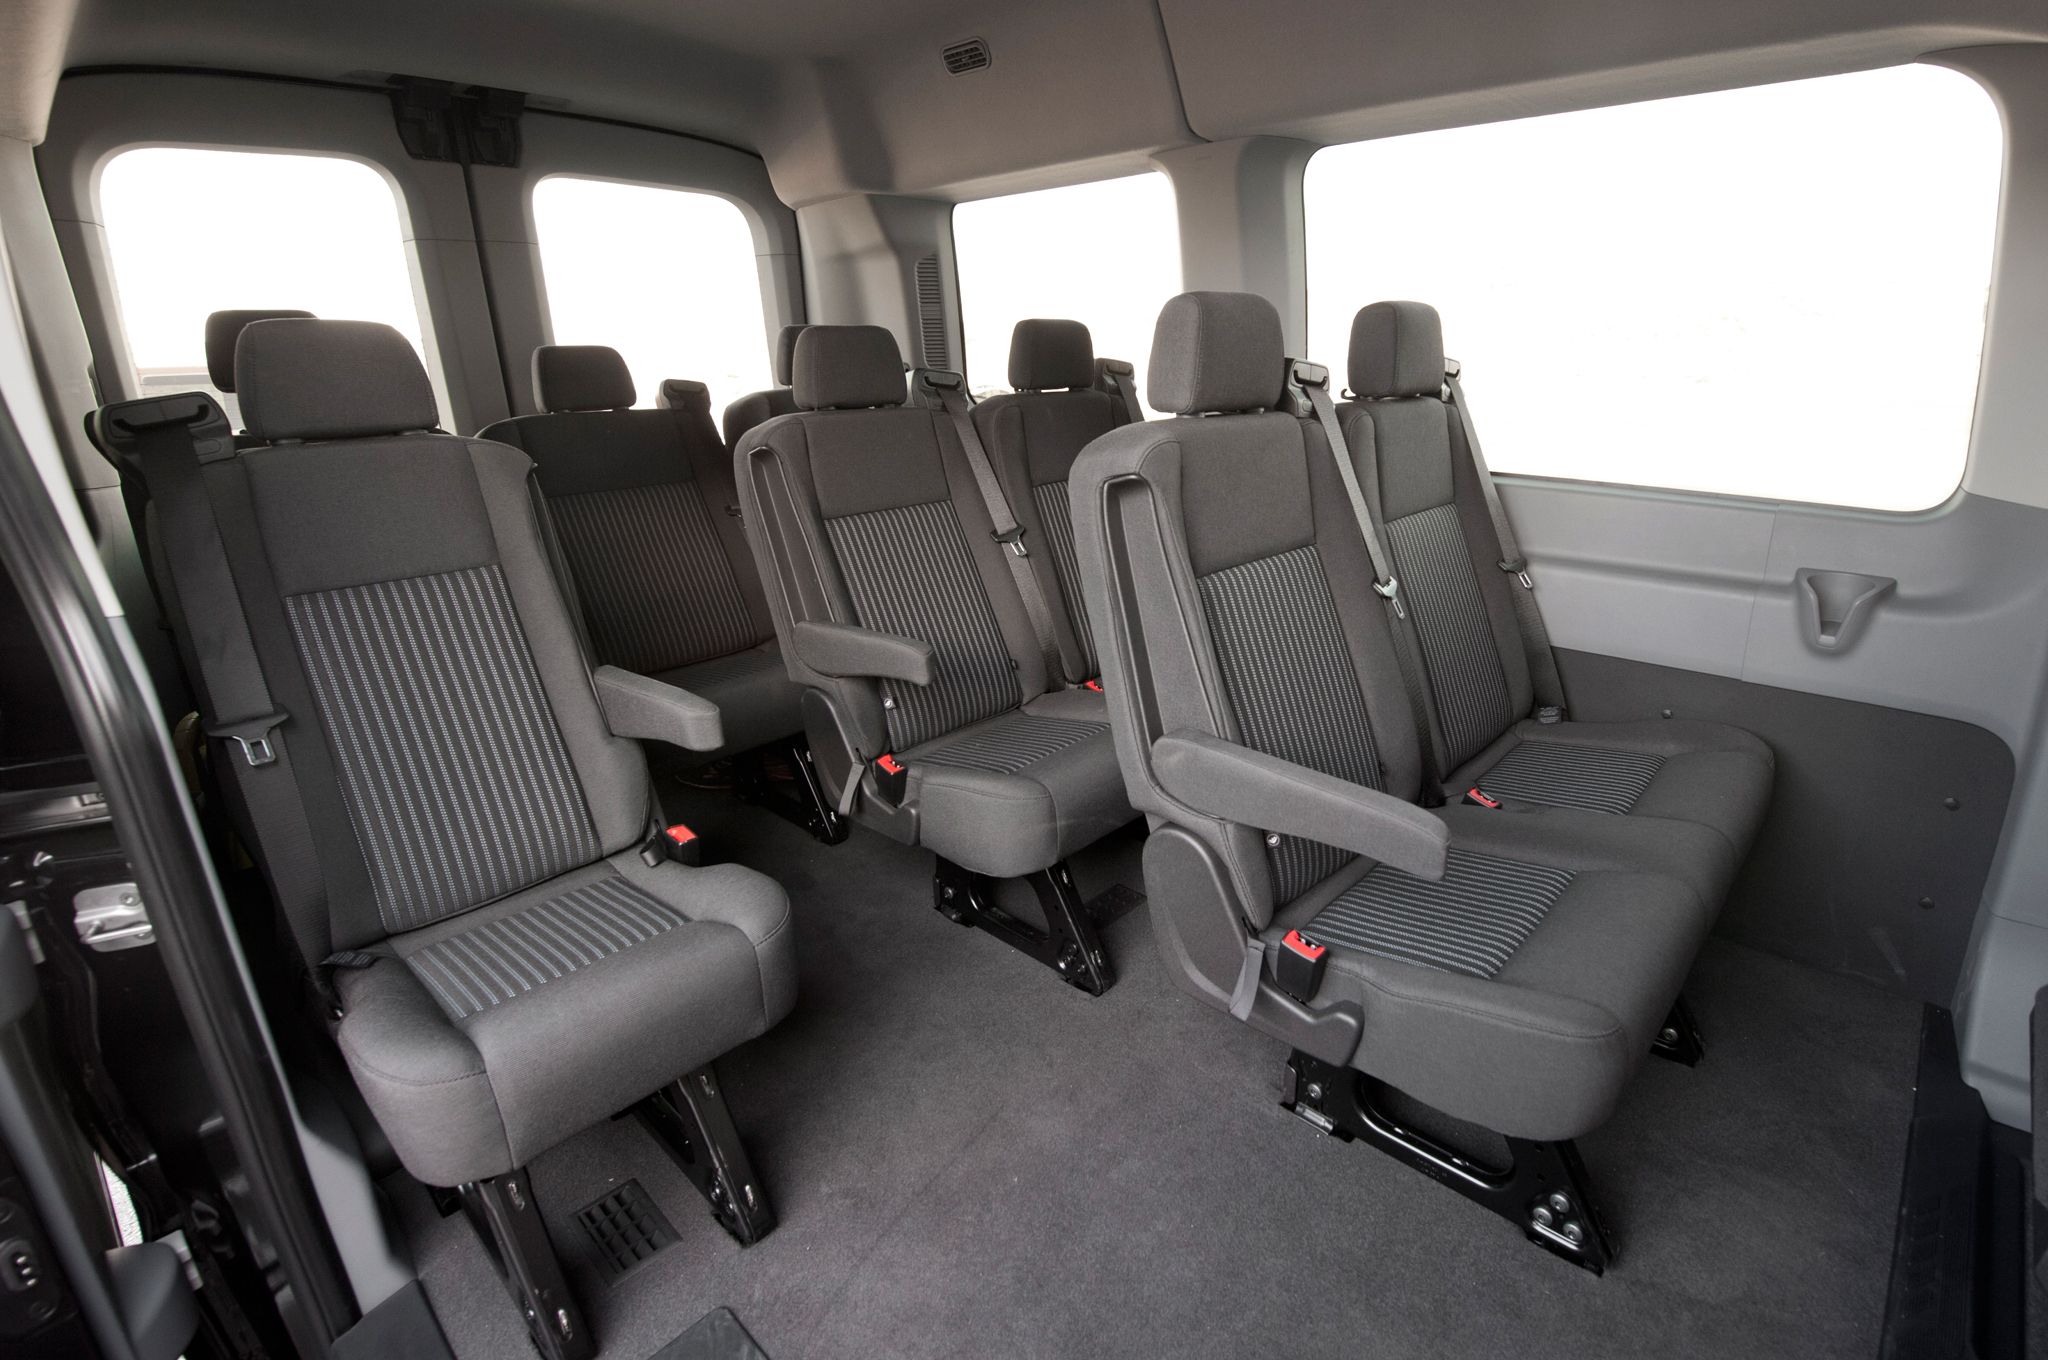 2015 Ford Transit 150 Seats Interior (Photo 6 of 13)